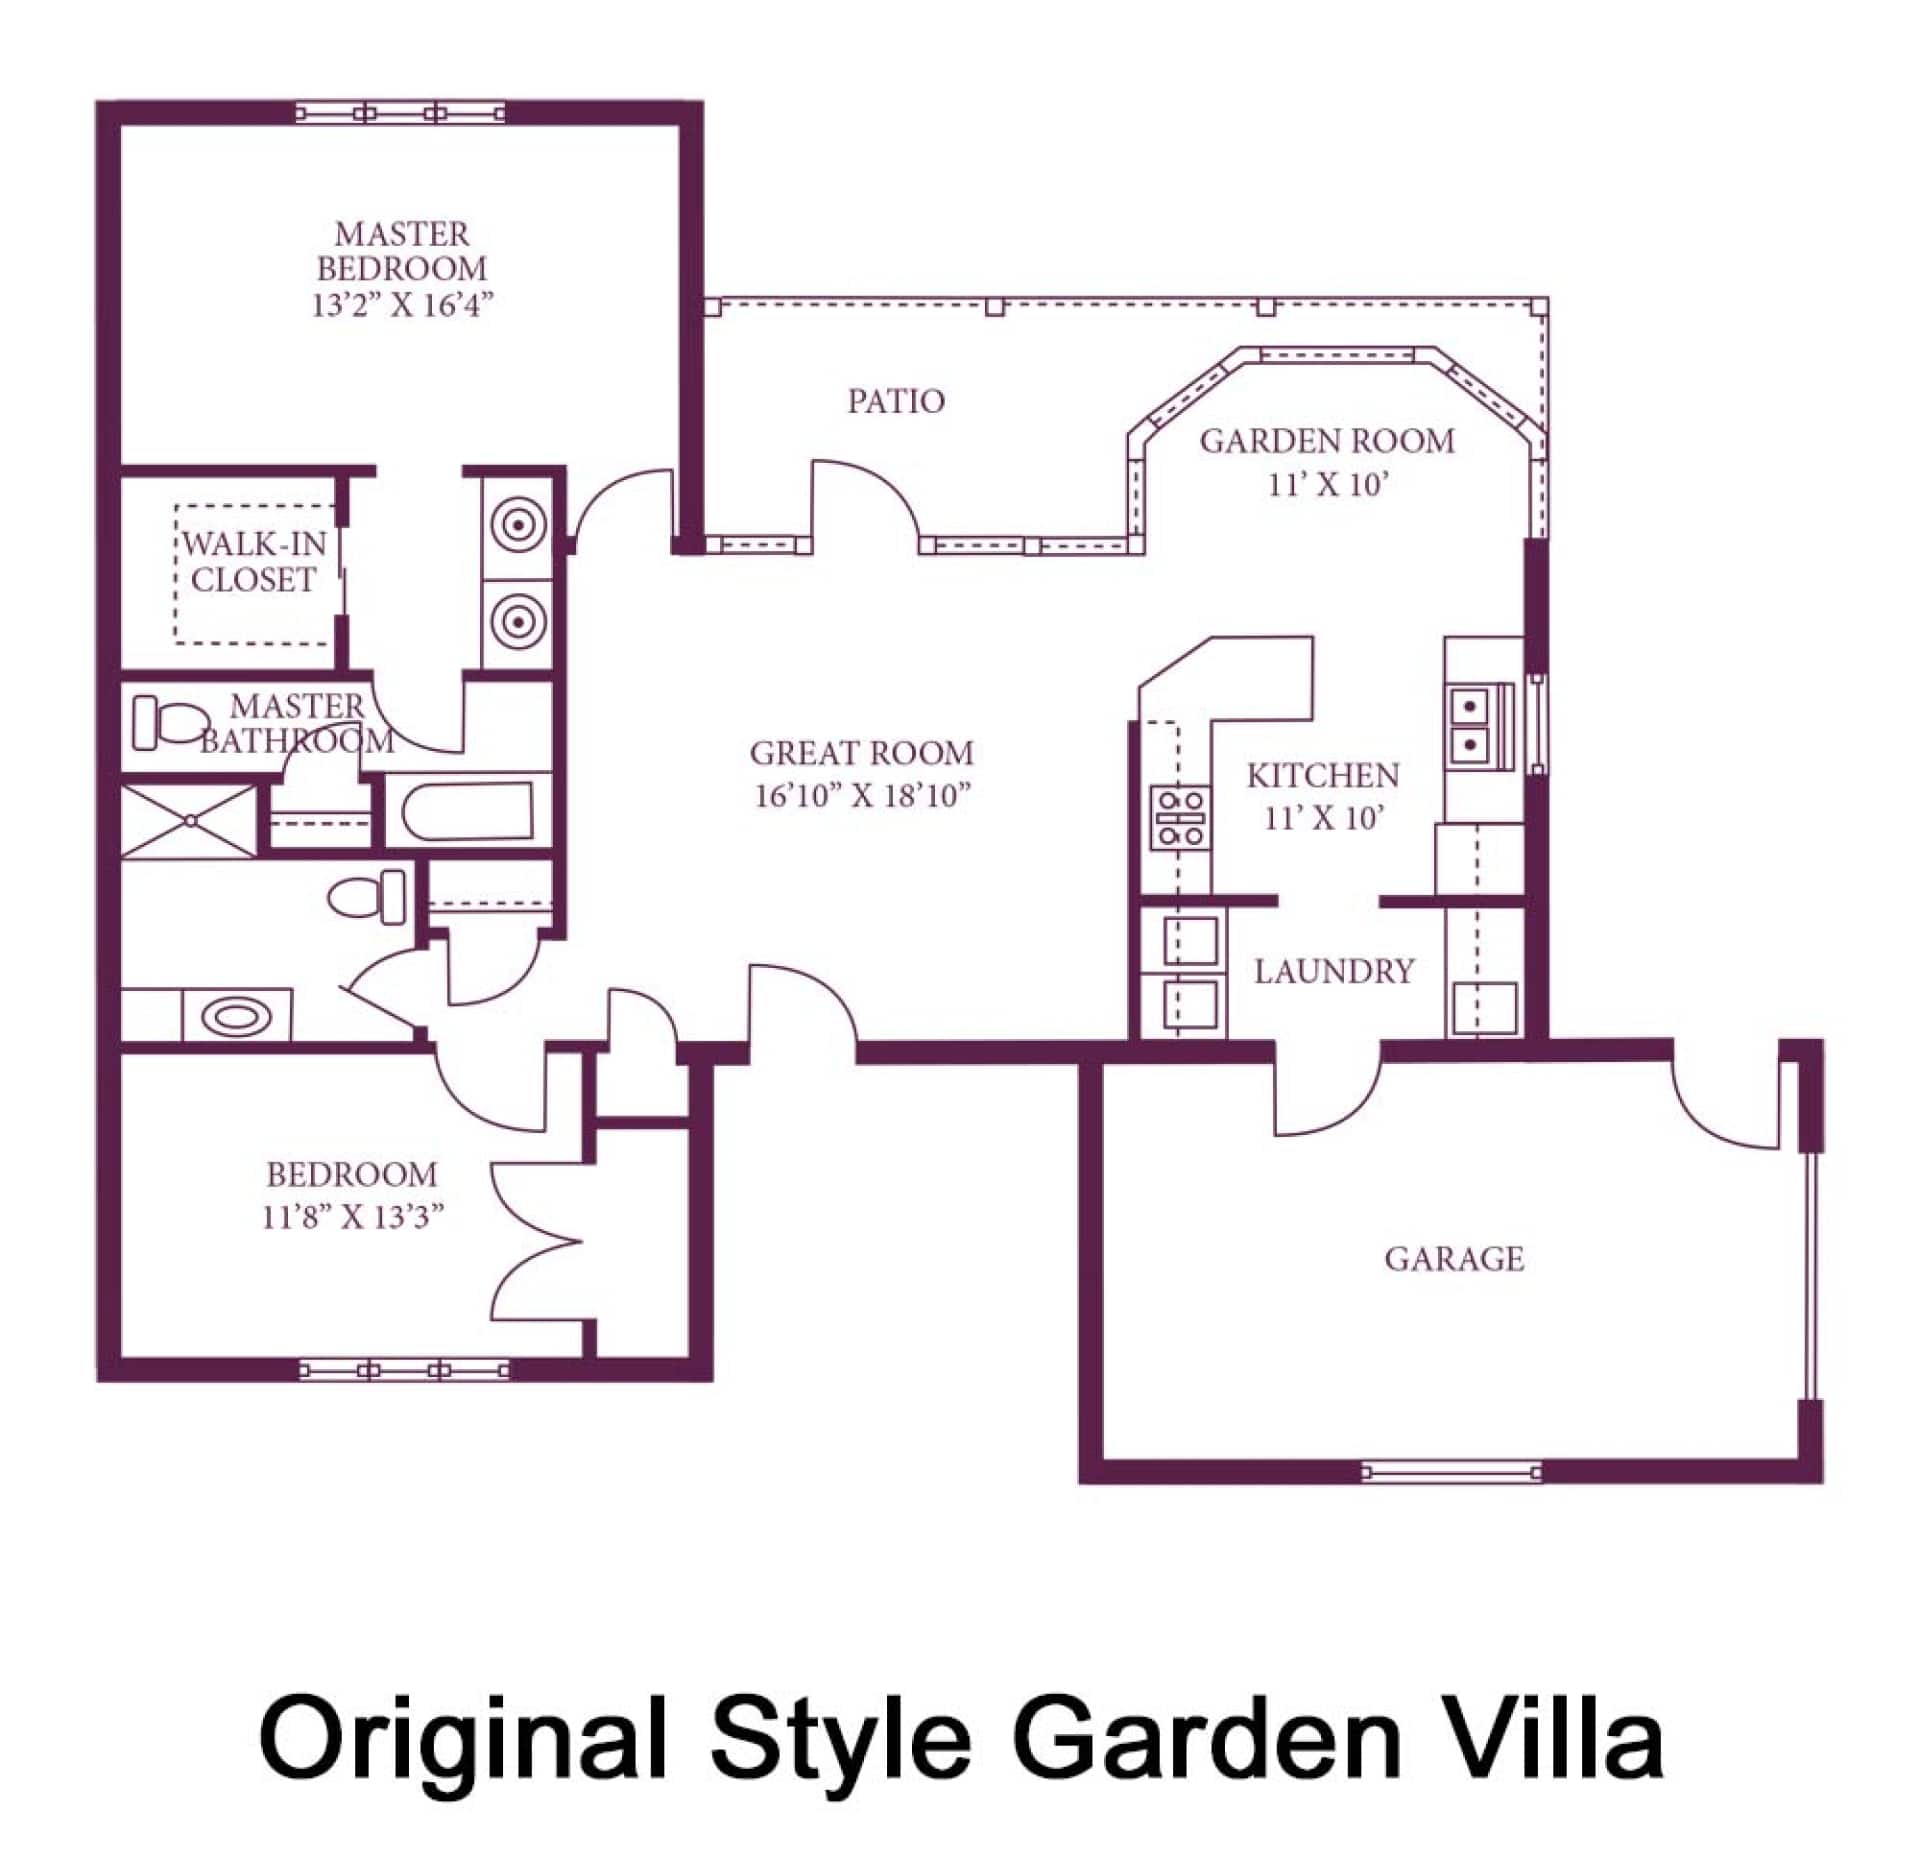 Floorplan for the original style Garden Villa